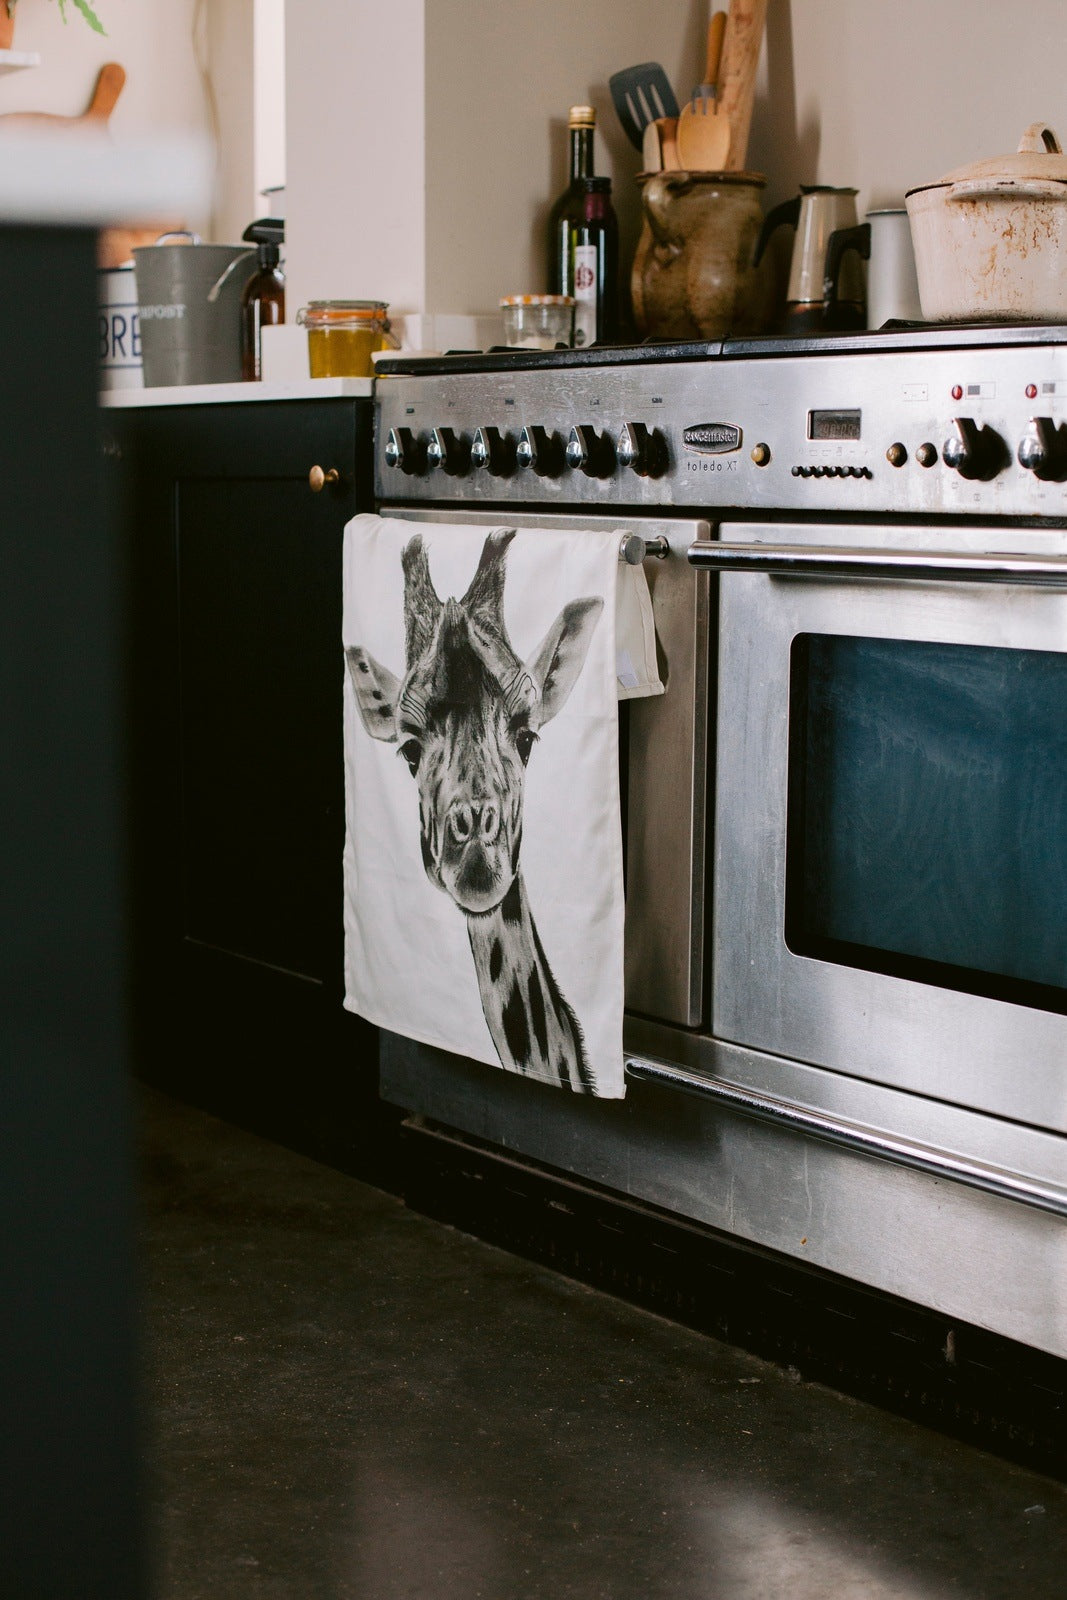 Giraffe Premium Tea Towel From Libra Fine Arts 